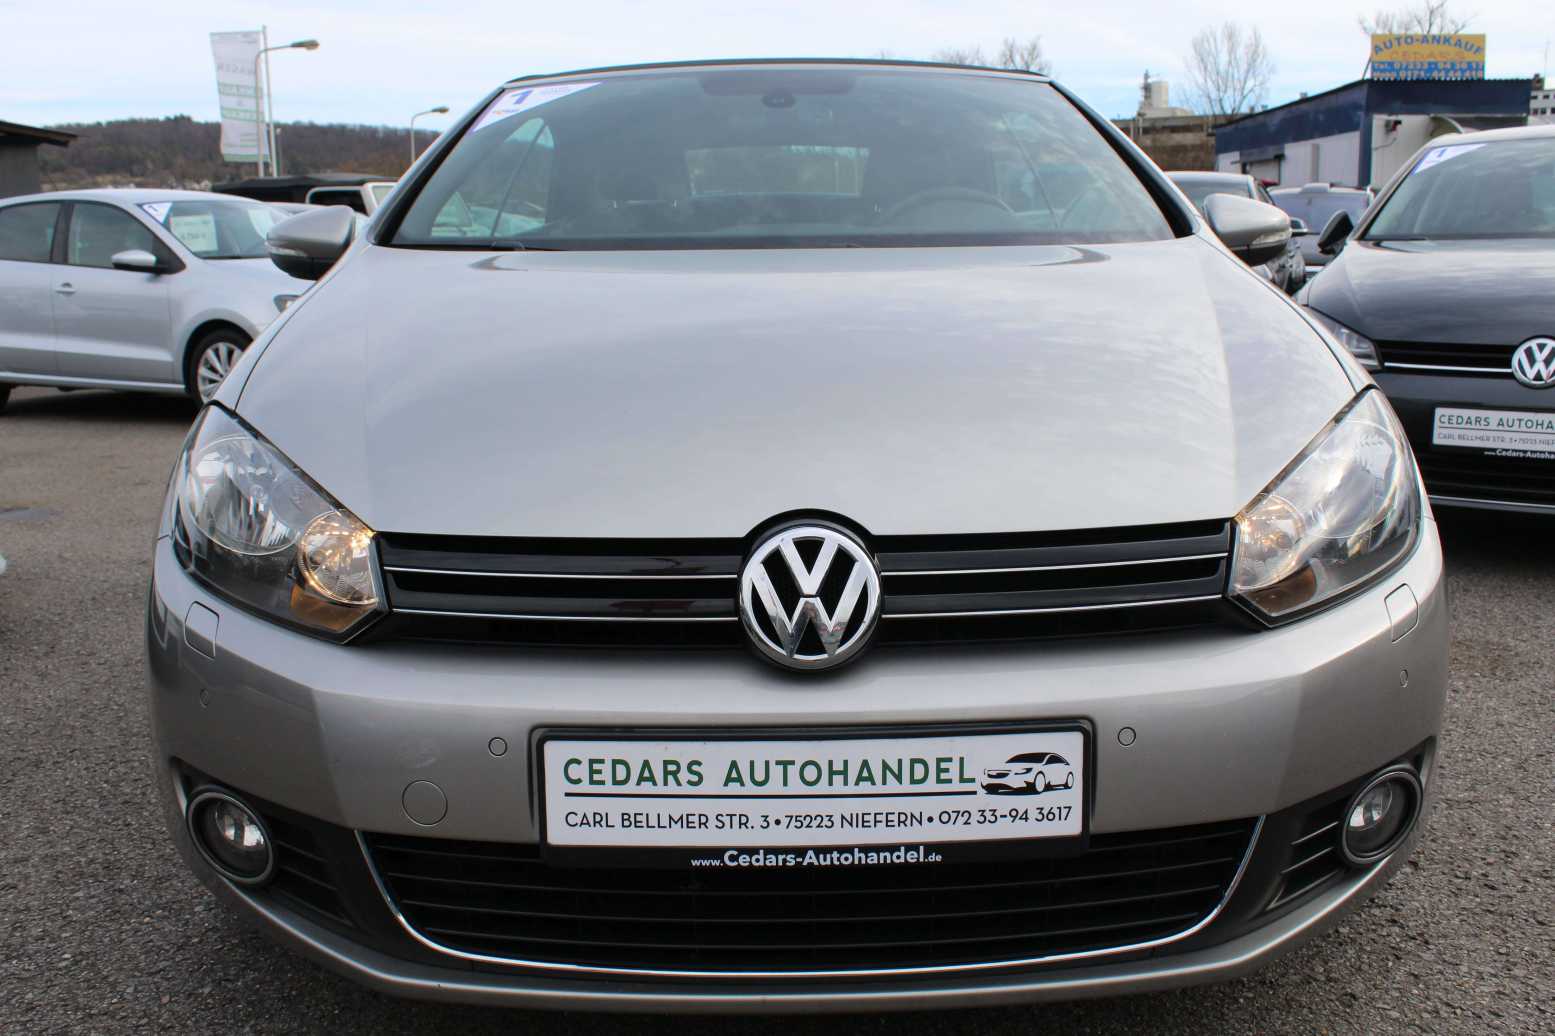 VW Cedars Autohandel 